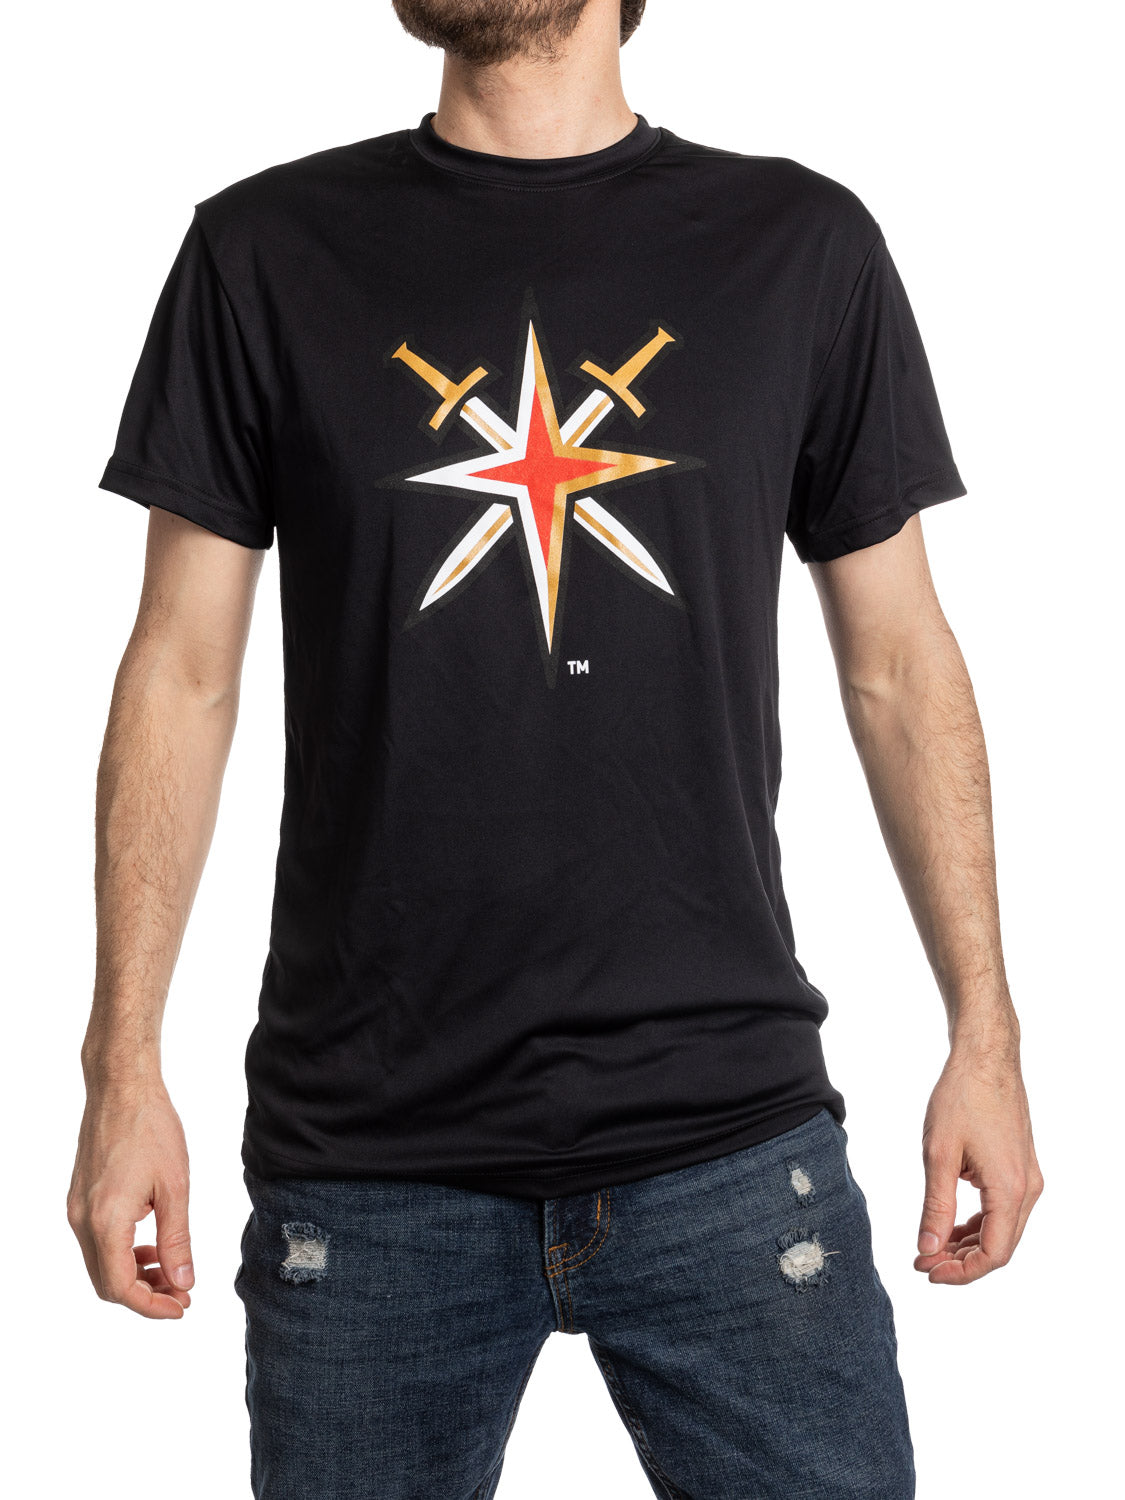 Vegas Golden Knights Short Sleeve Rashguard T Shirt - Alternate Logo